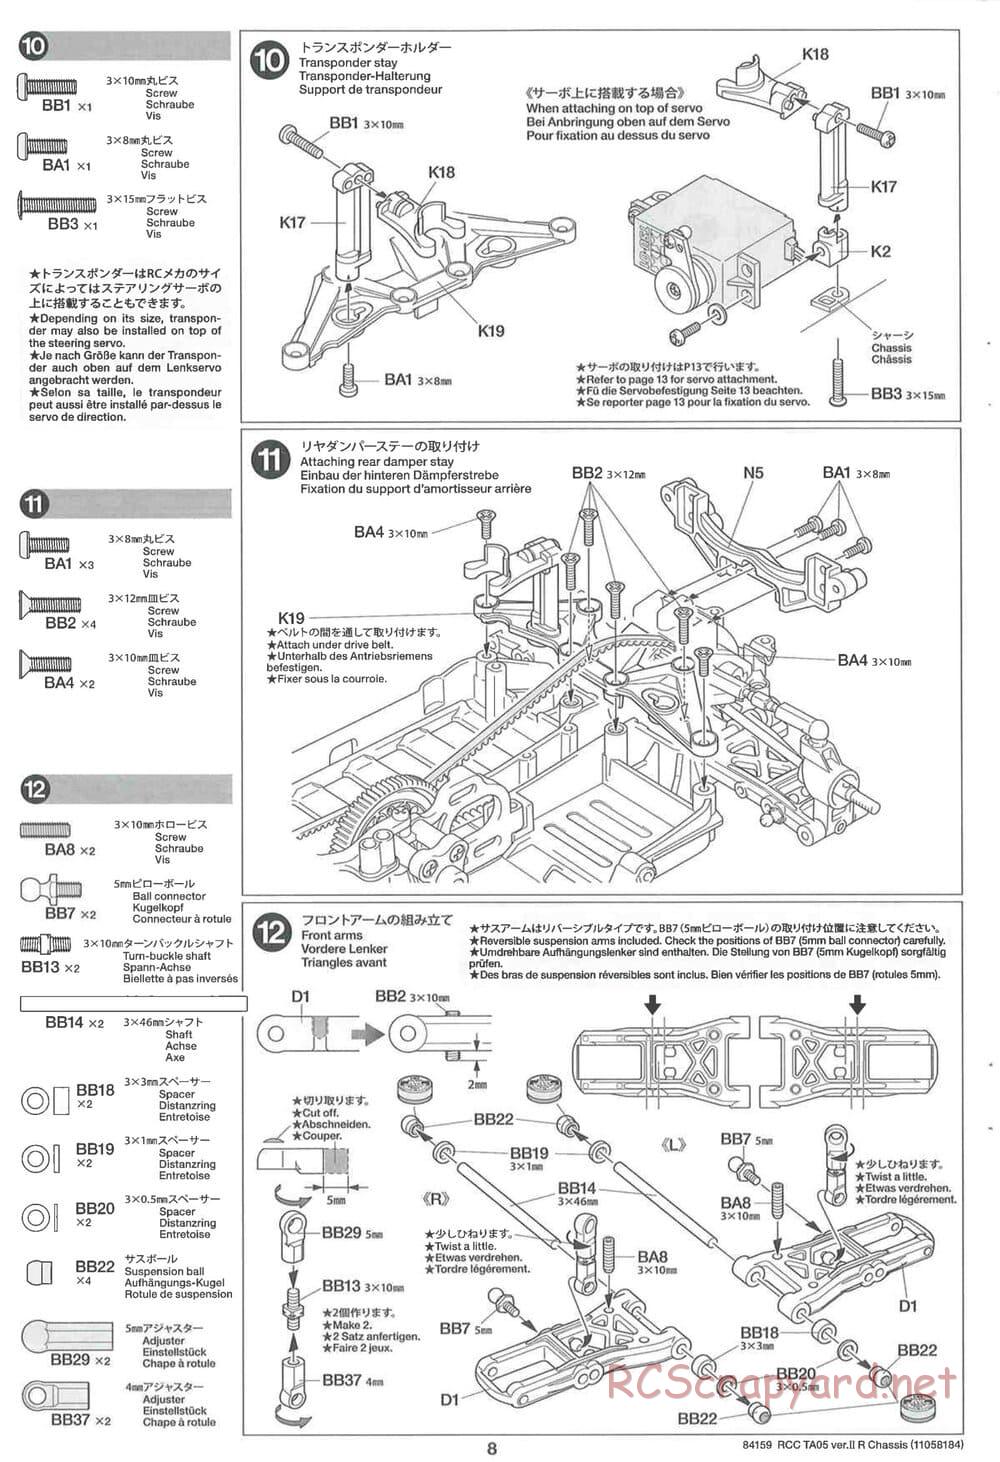 Tamiya - TA05 Ver.II R Chassis - Manual - Page 8